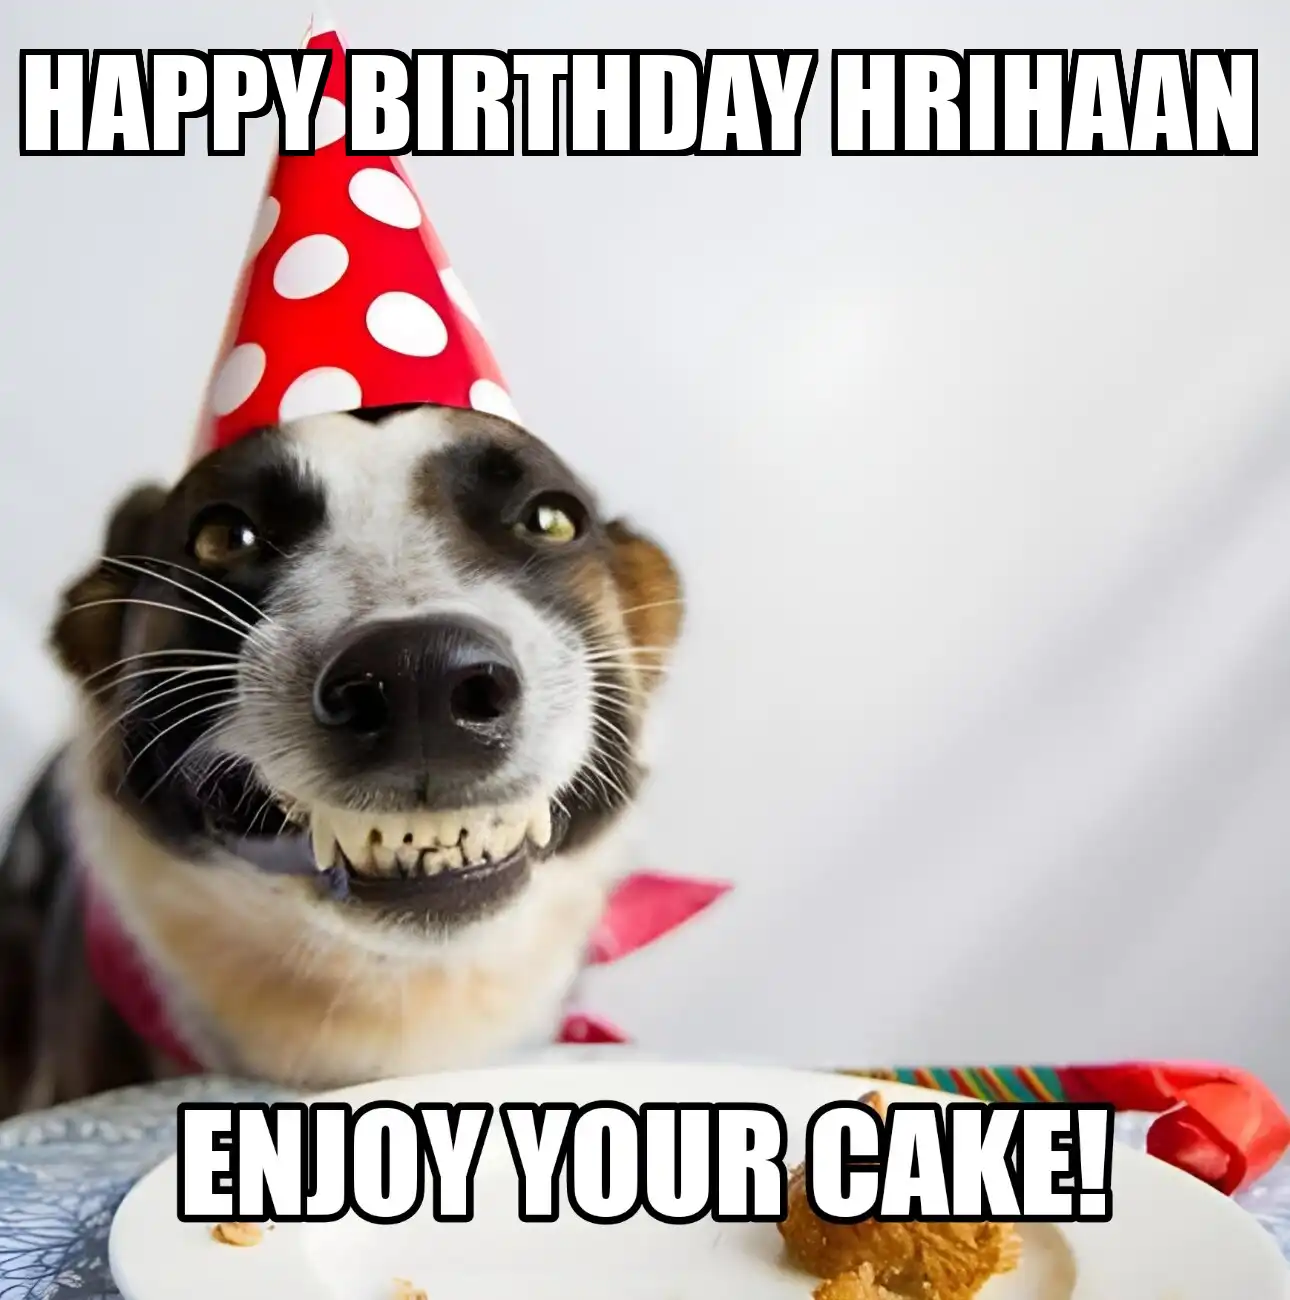 Happy Birthday Hrihaan Enjoy Your Cake Dog Meme